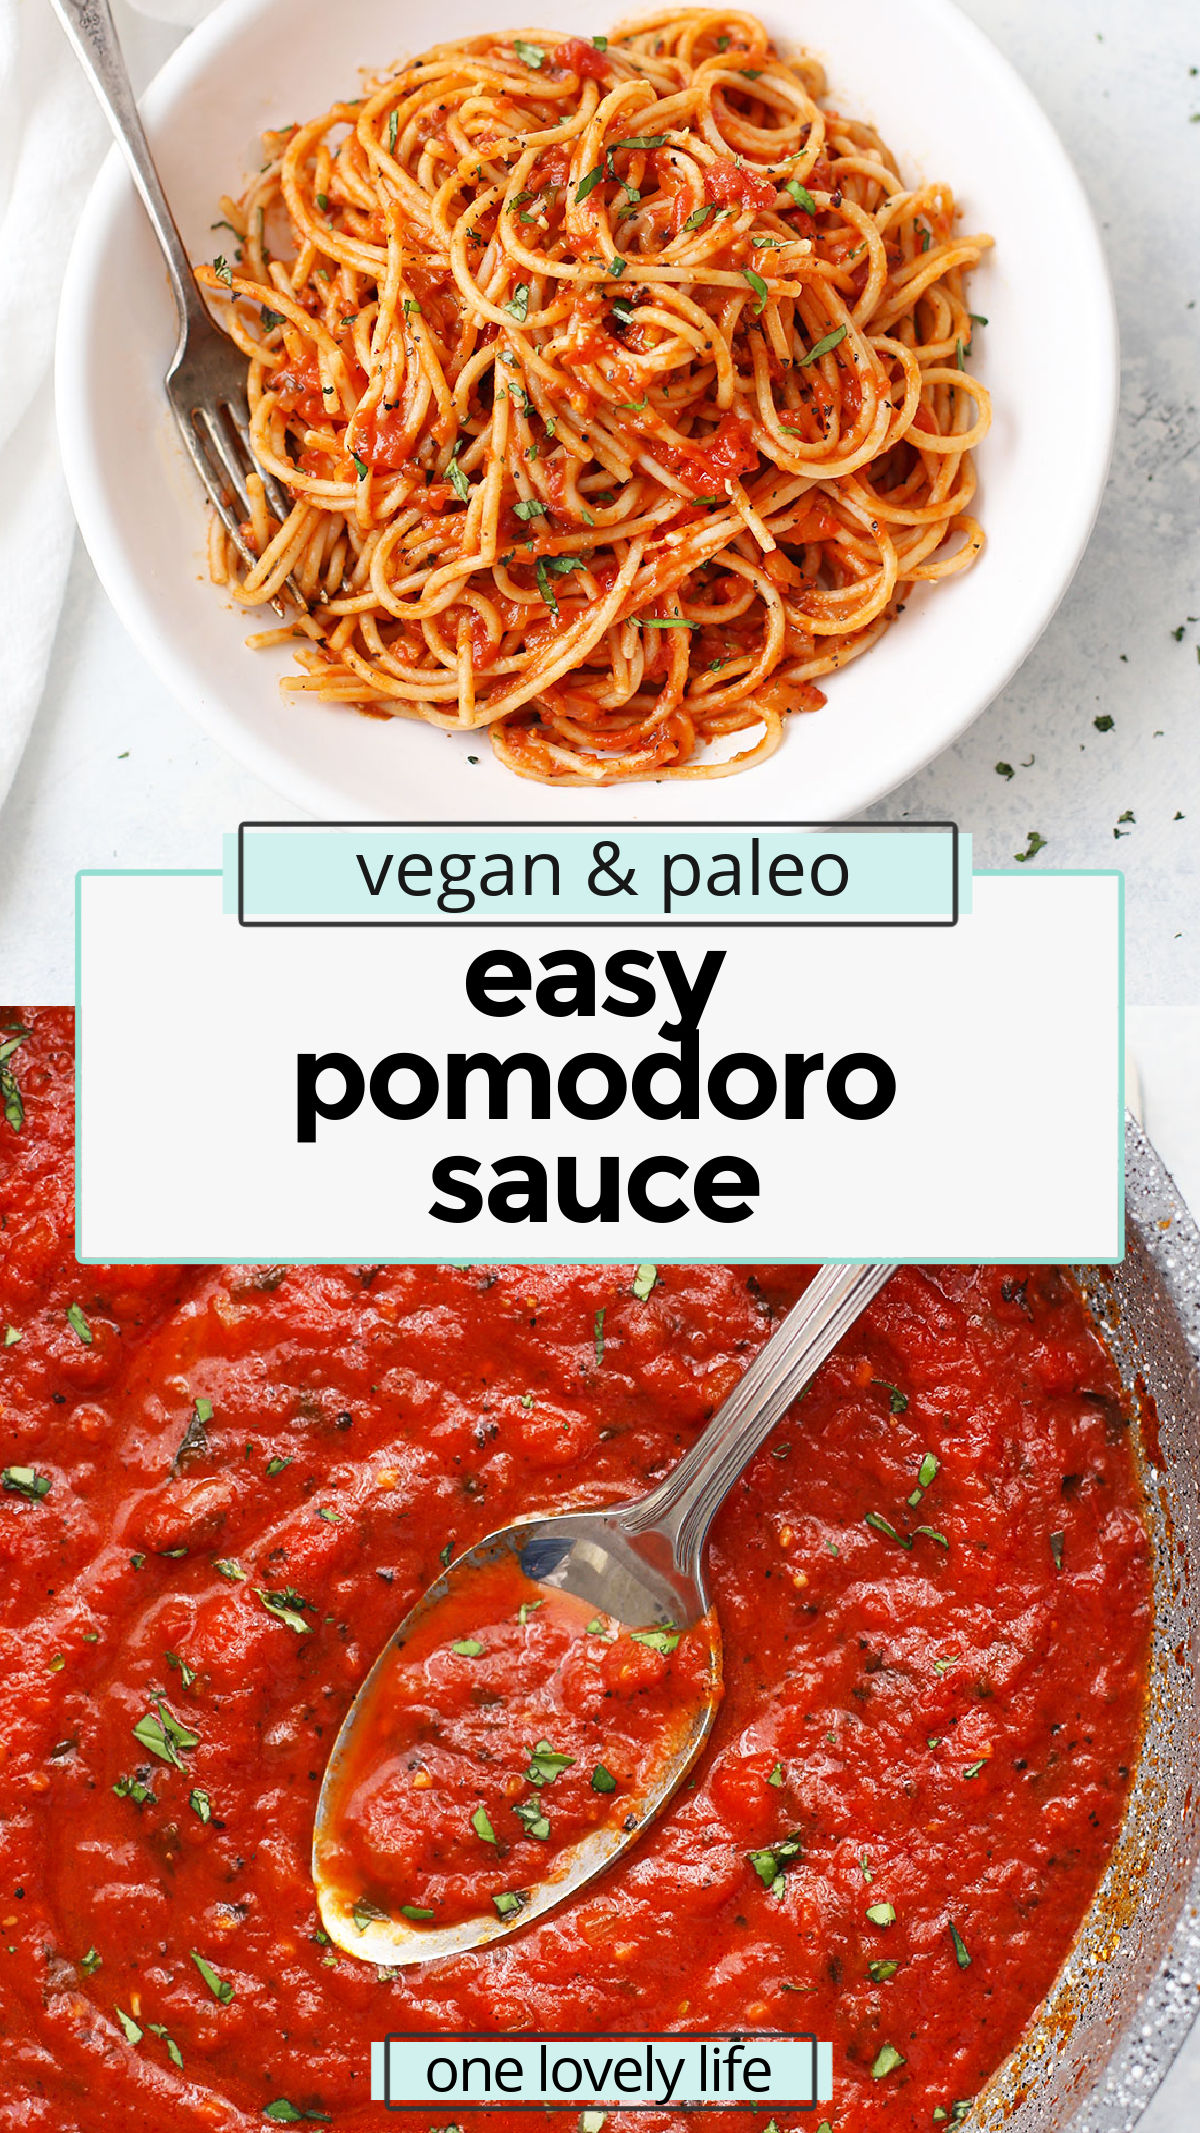 Pomodoro Sauce Recipe - This simple tomato sauce recipe comes together quickly and tastes DELICIOUS over pasta, chicken, zucchini noodles, spaghetti squash, and more! (Gluten free, vegan, paleo & whole30 friendly!) // tomato sauce recipe // pasta sauce recipe // pomodoro sauce recipe // pasta al pomodoro // pasta pomodoro // italian pomodoro // homemade tomato sauce // homemade spaghetti sauce // healthy spaghetti sauce // vegan pasta sauce // gluten free pasta sauce